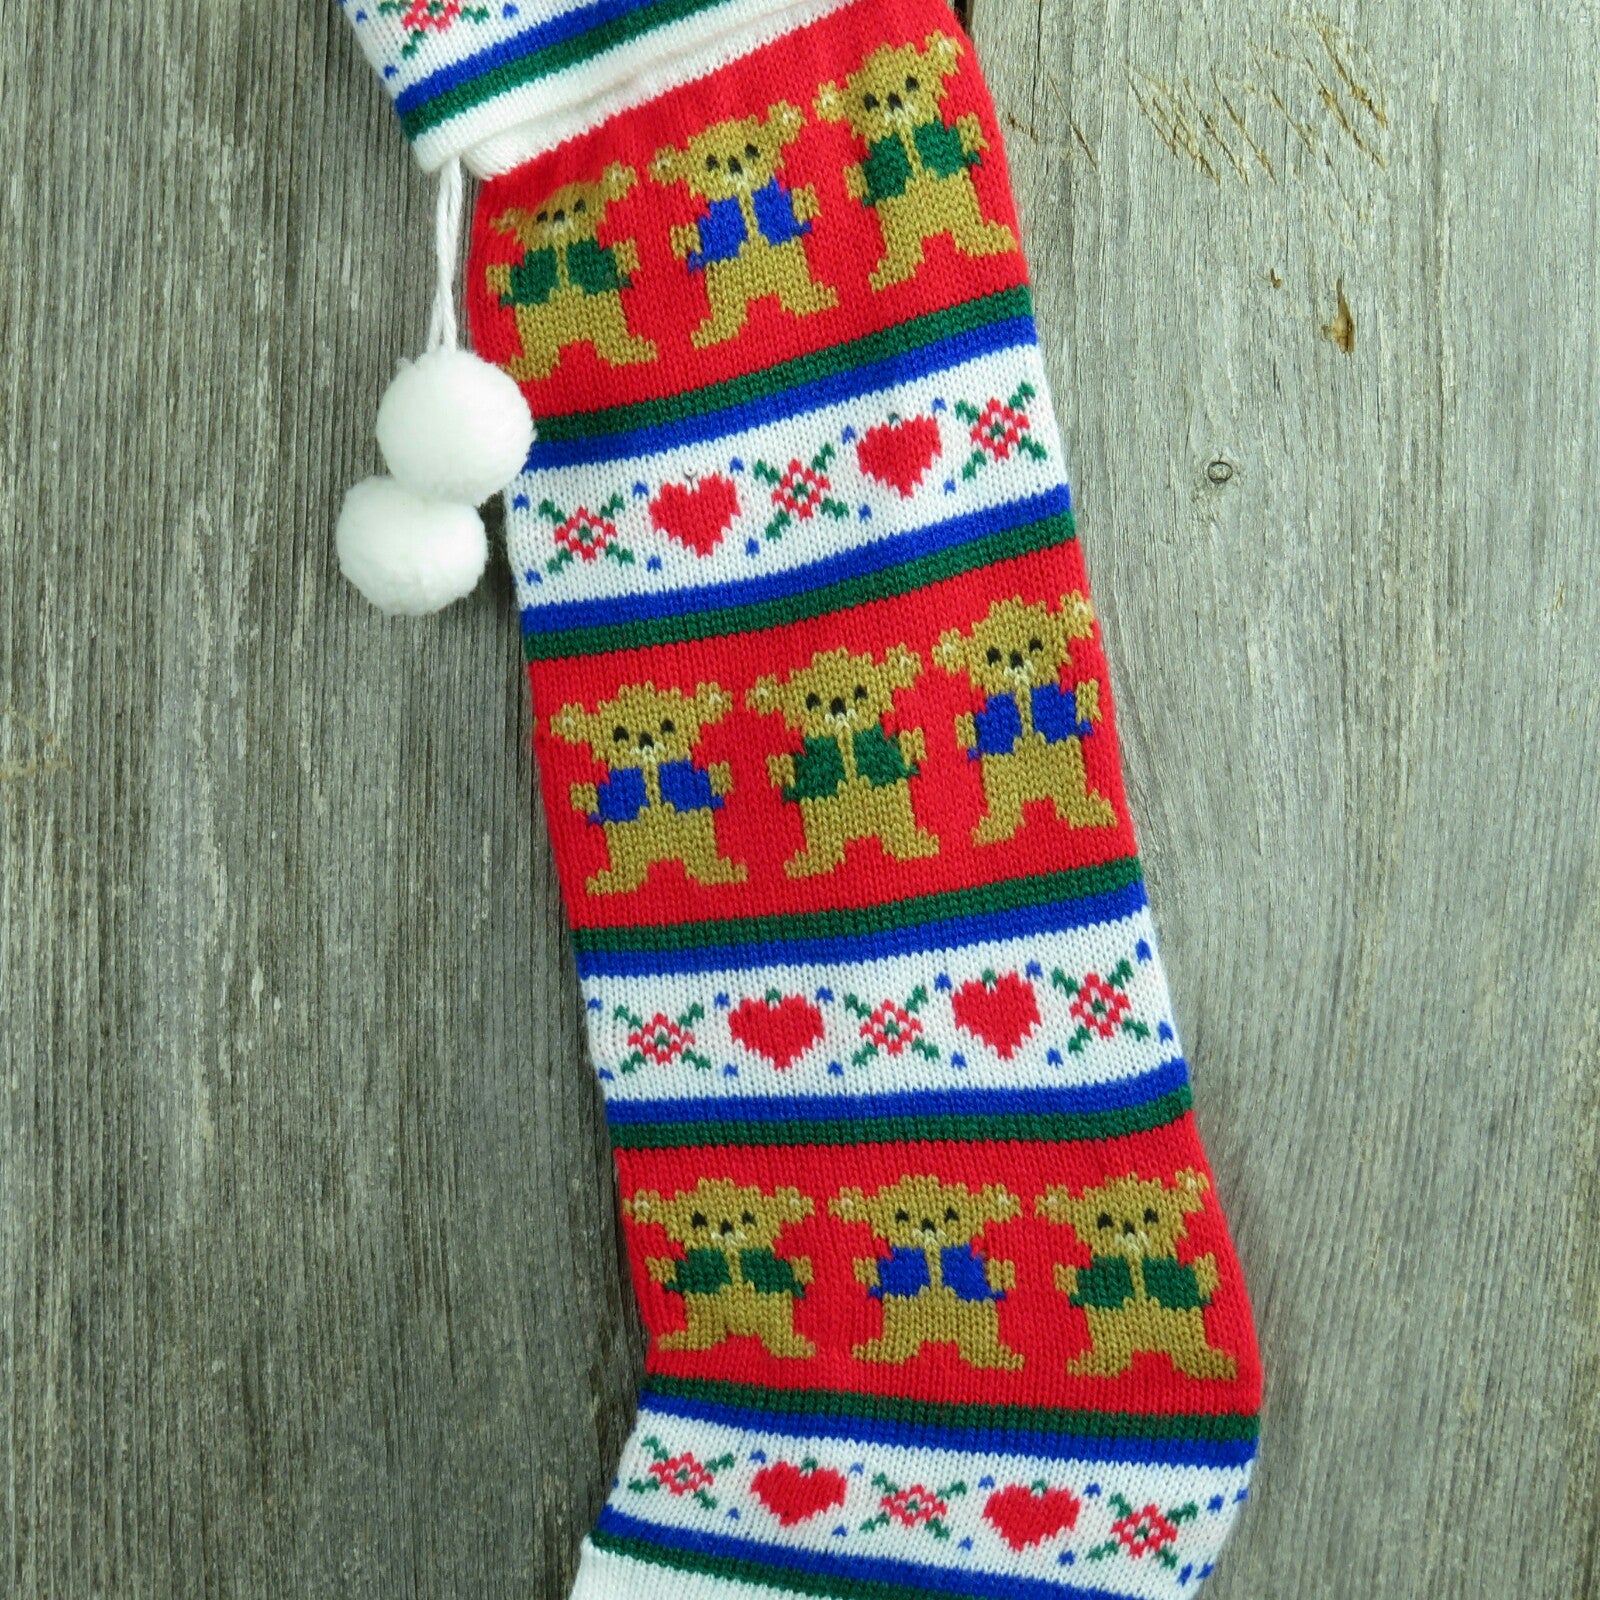 Vintage Knit Teddy Bear Stocking Kurt Adler Christmas Red White Hearts Striped Holiday Decor 1980s - At Grandma's Table